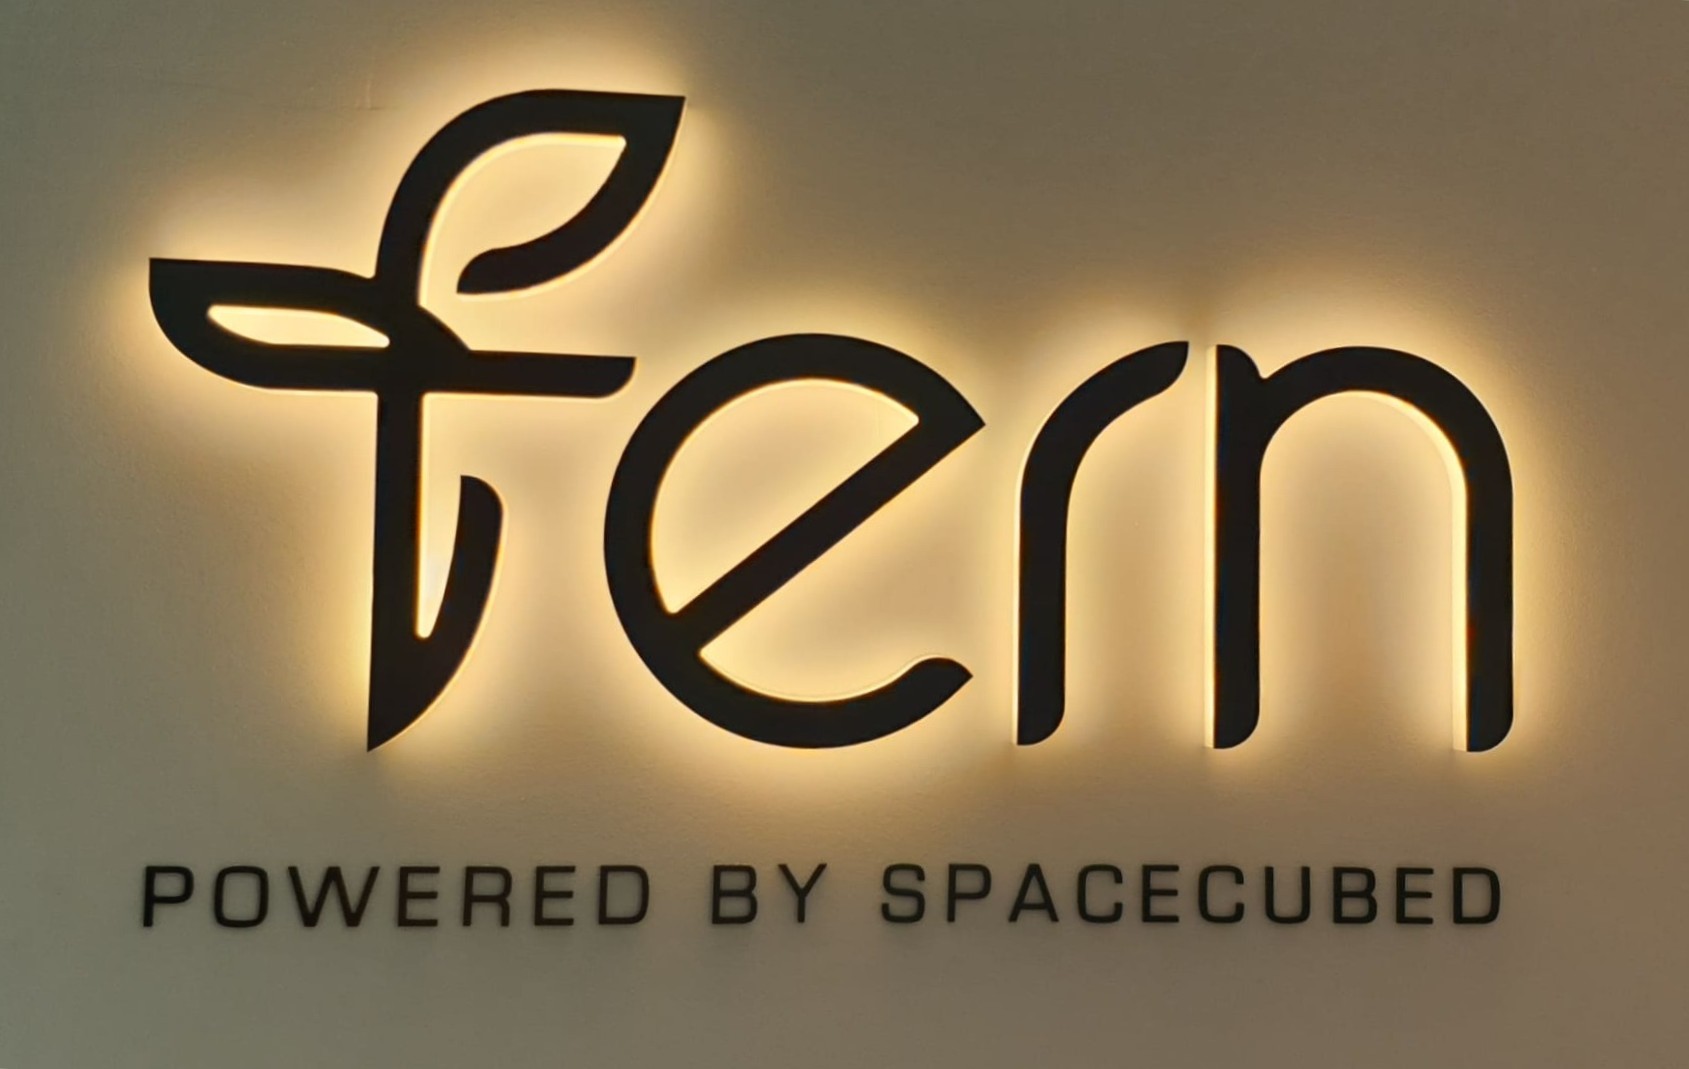 Custom illuminated logo sign for Perth business